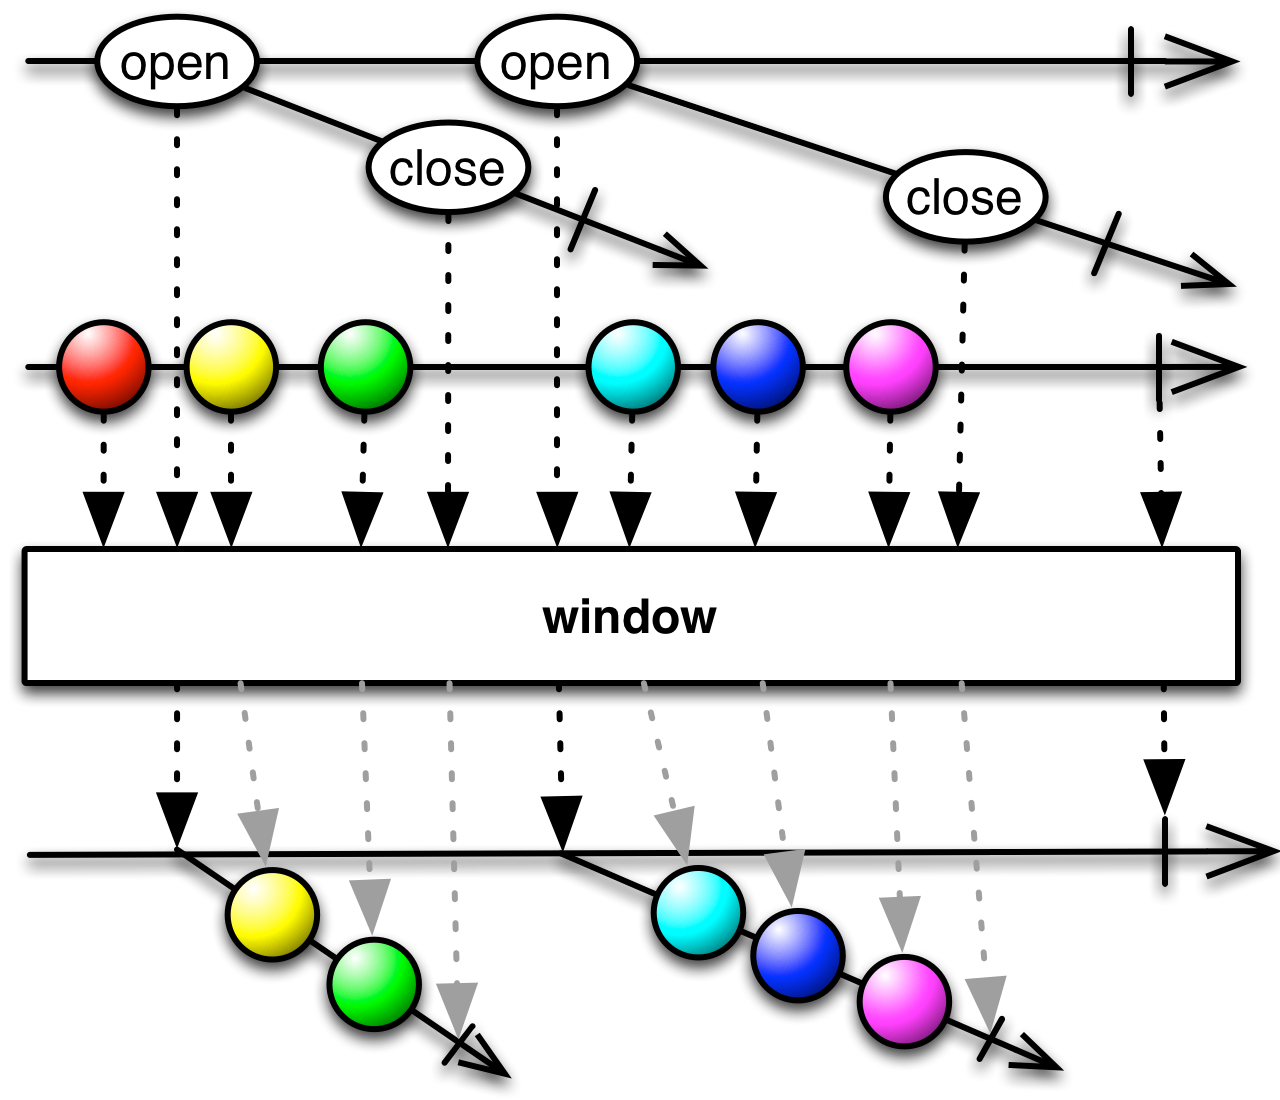 window(windowOpenings, closingSelector)